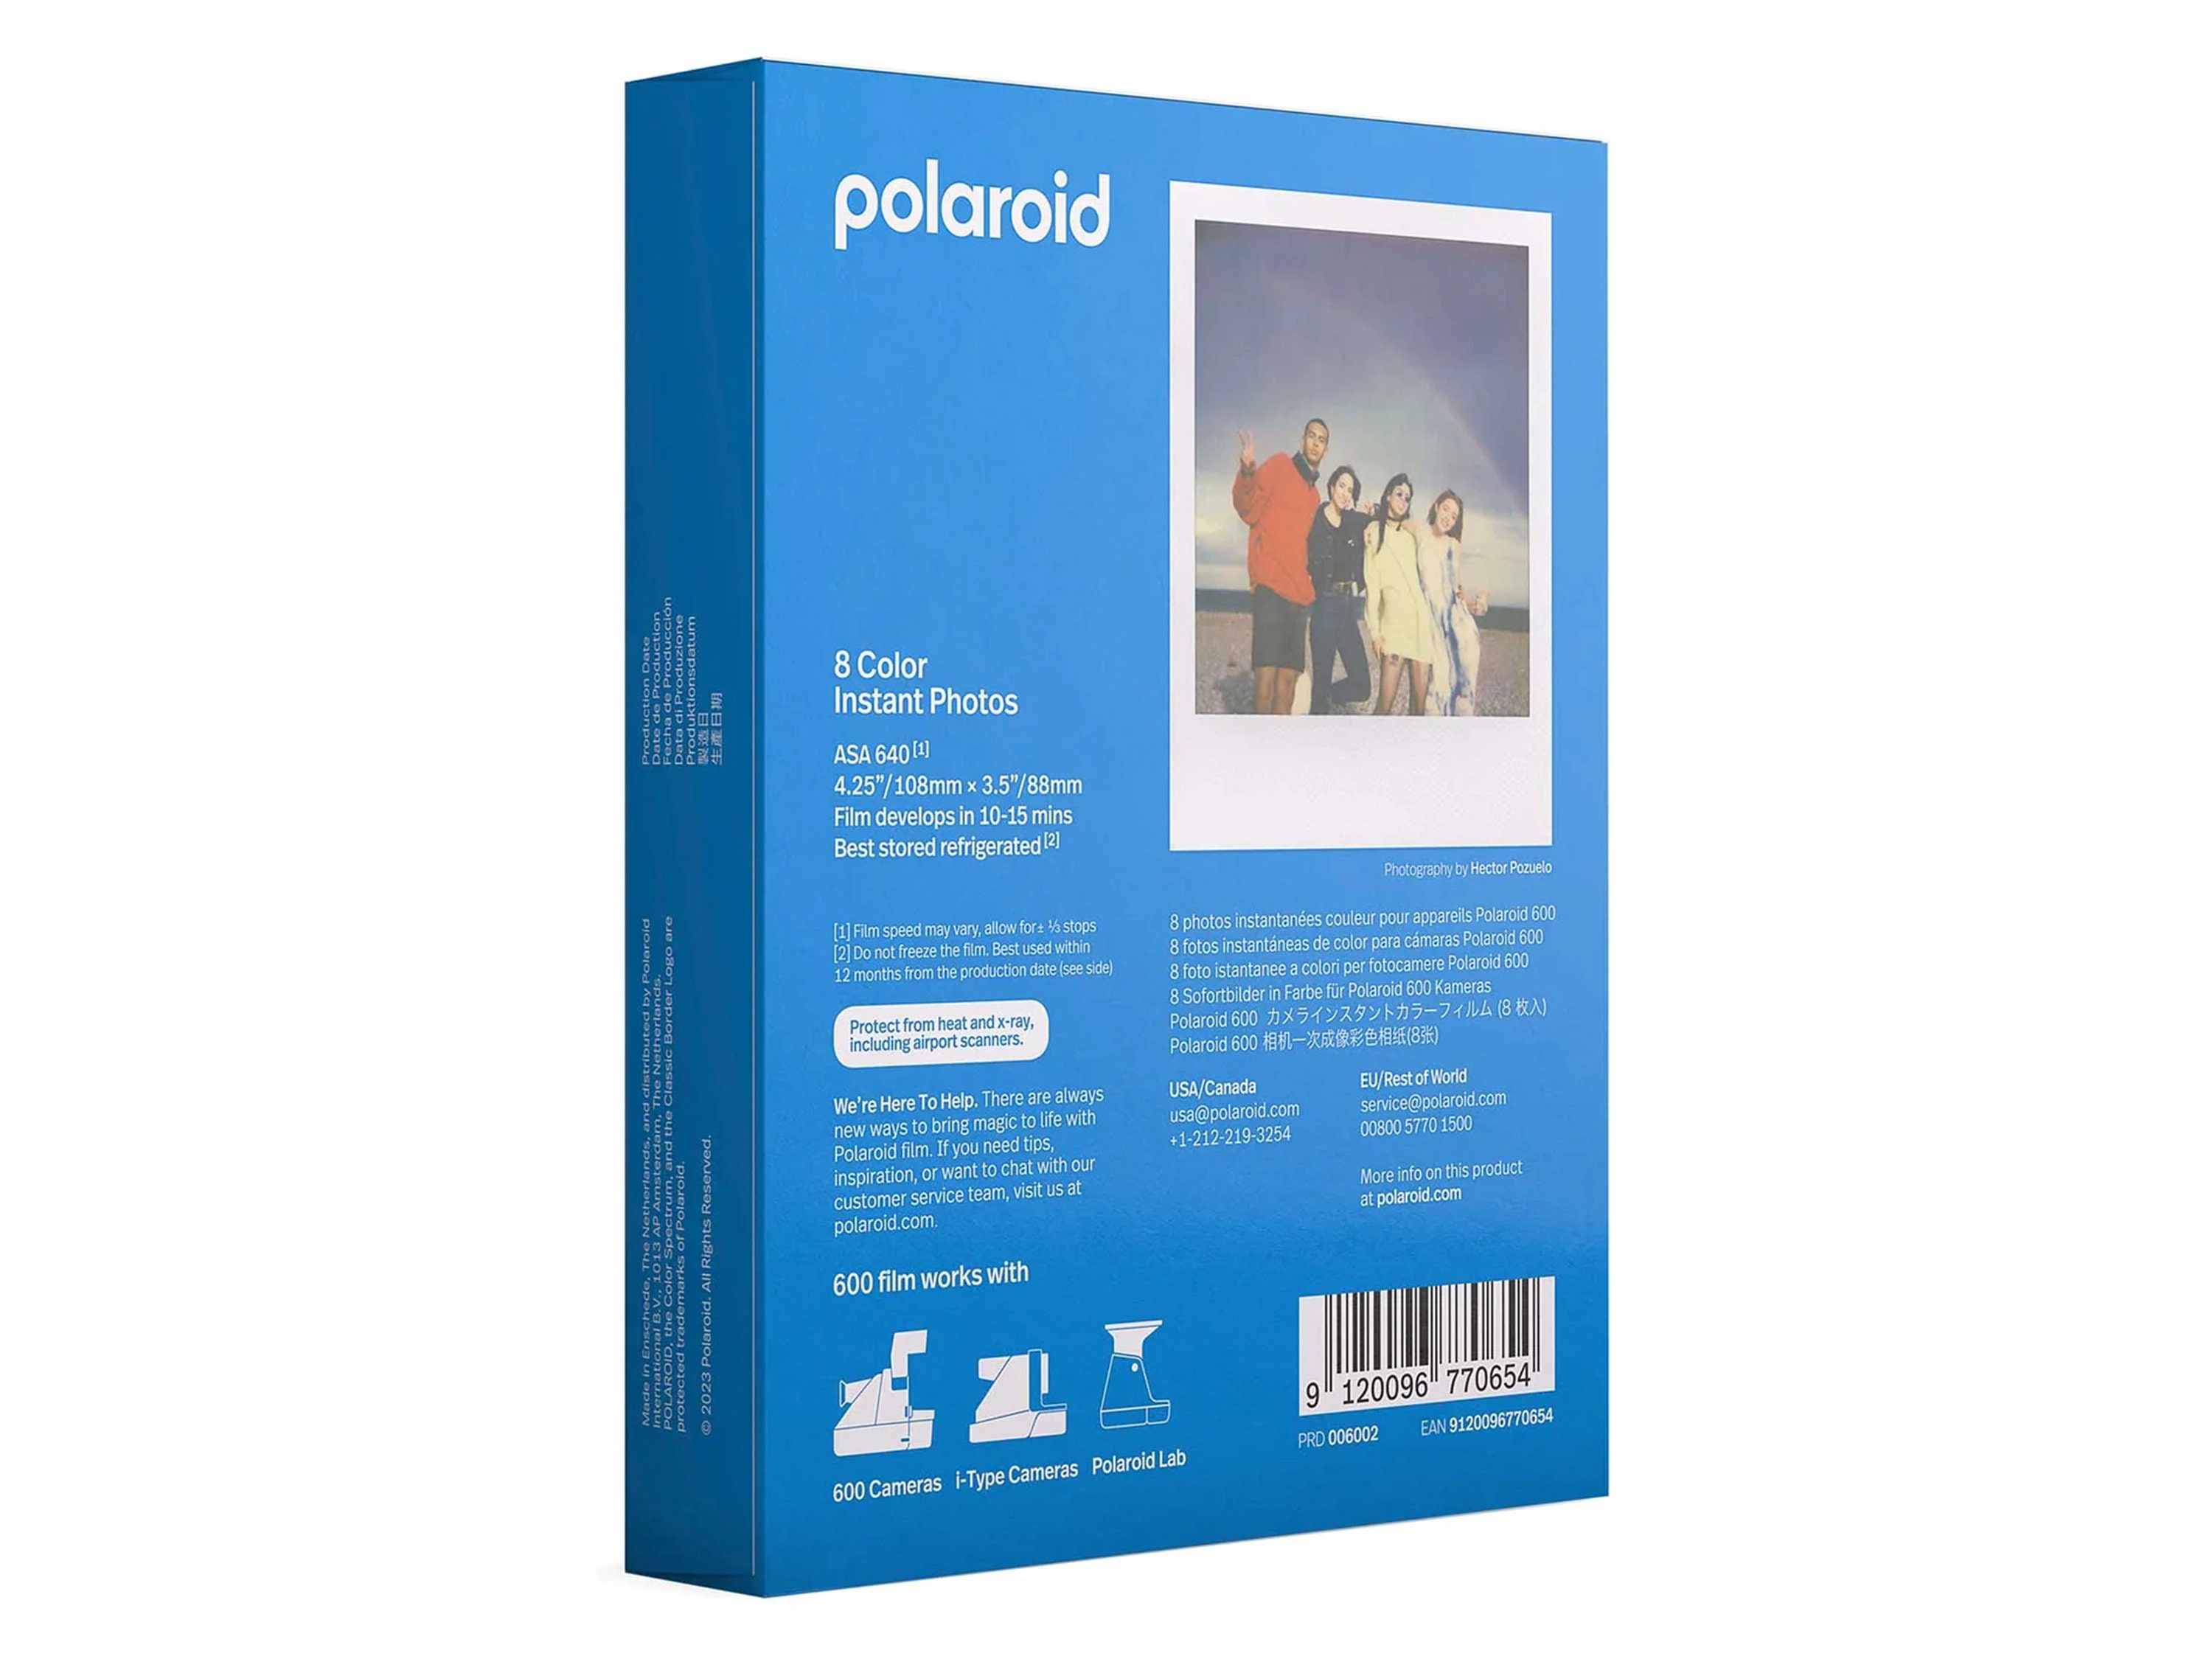 Polaroid I-Type Color — Glass Key Photo